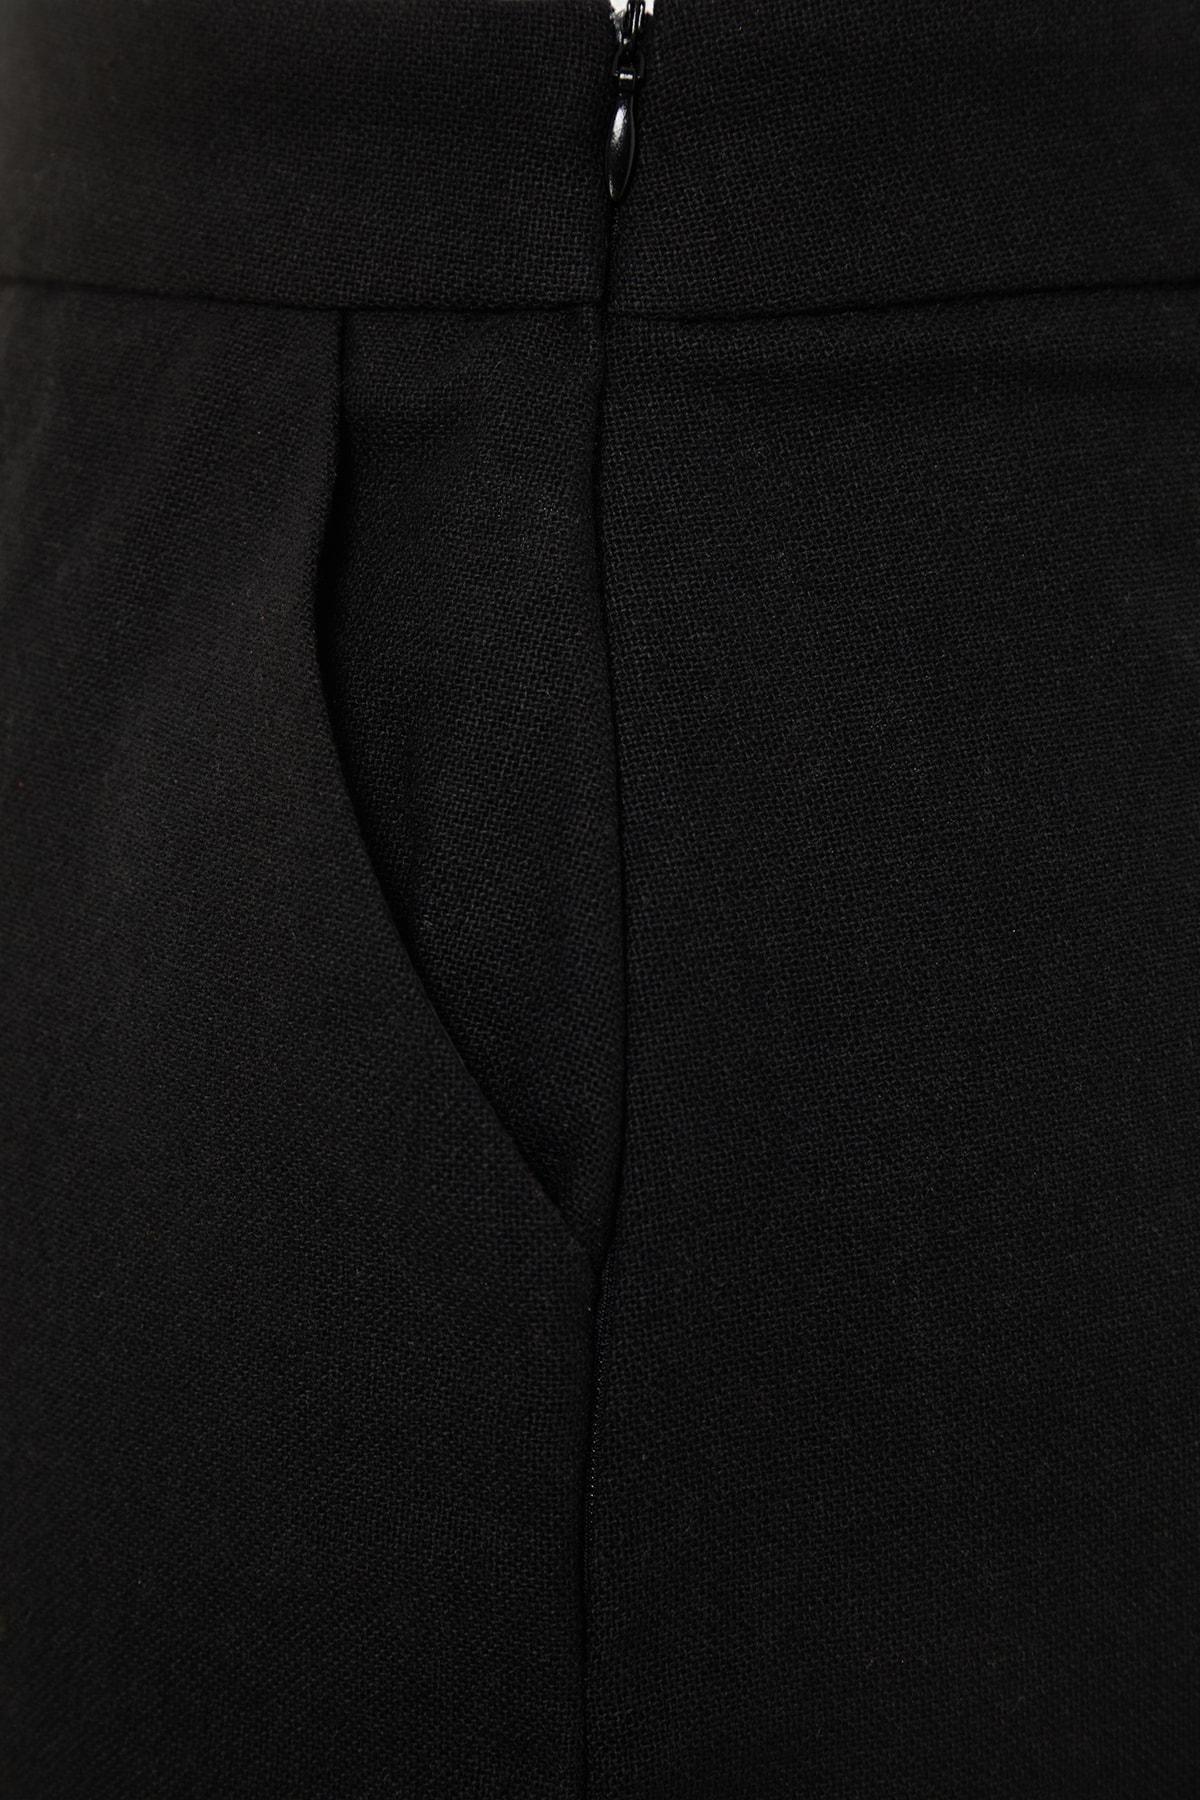 Trendyol - Black Relaxed Shorts